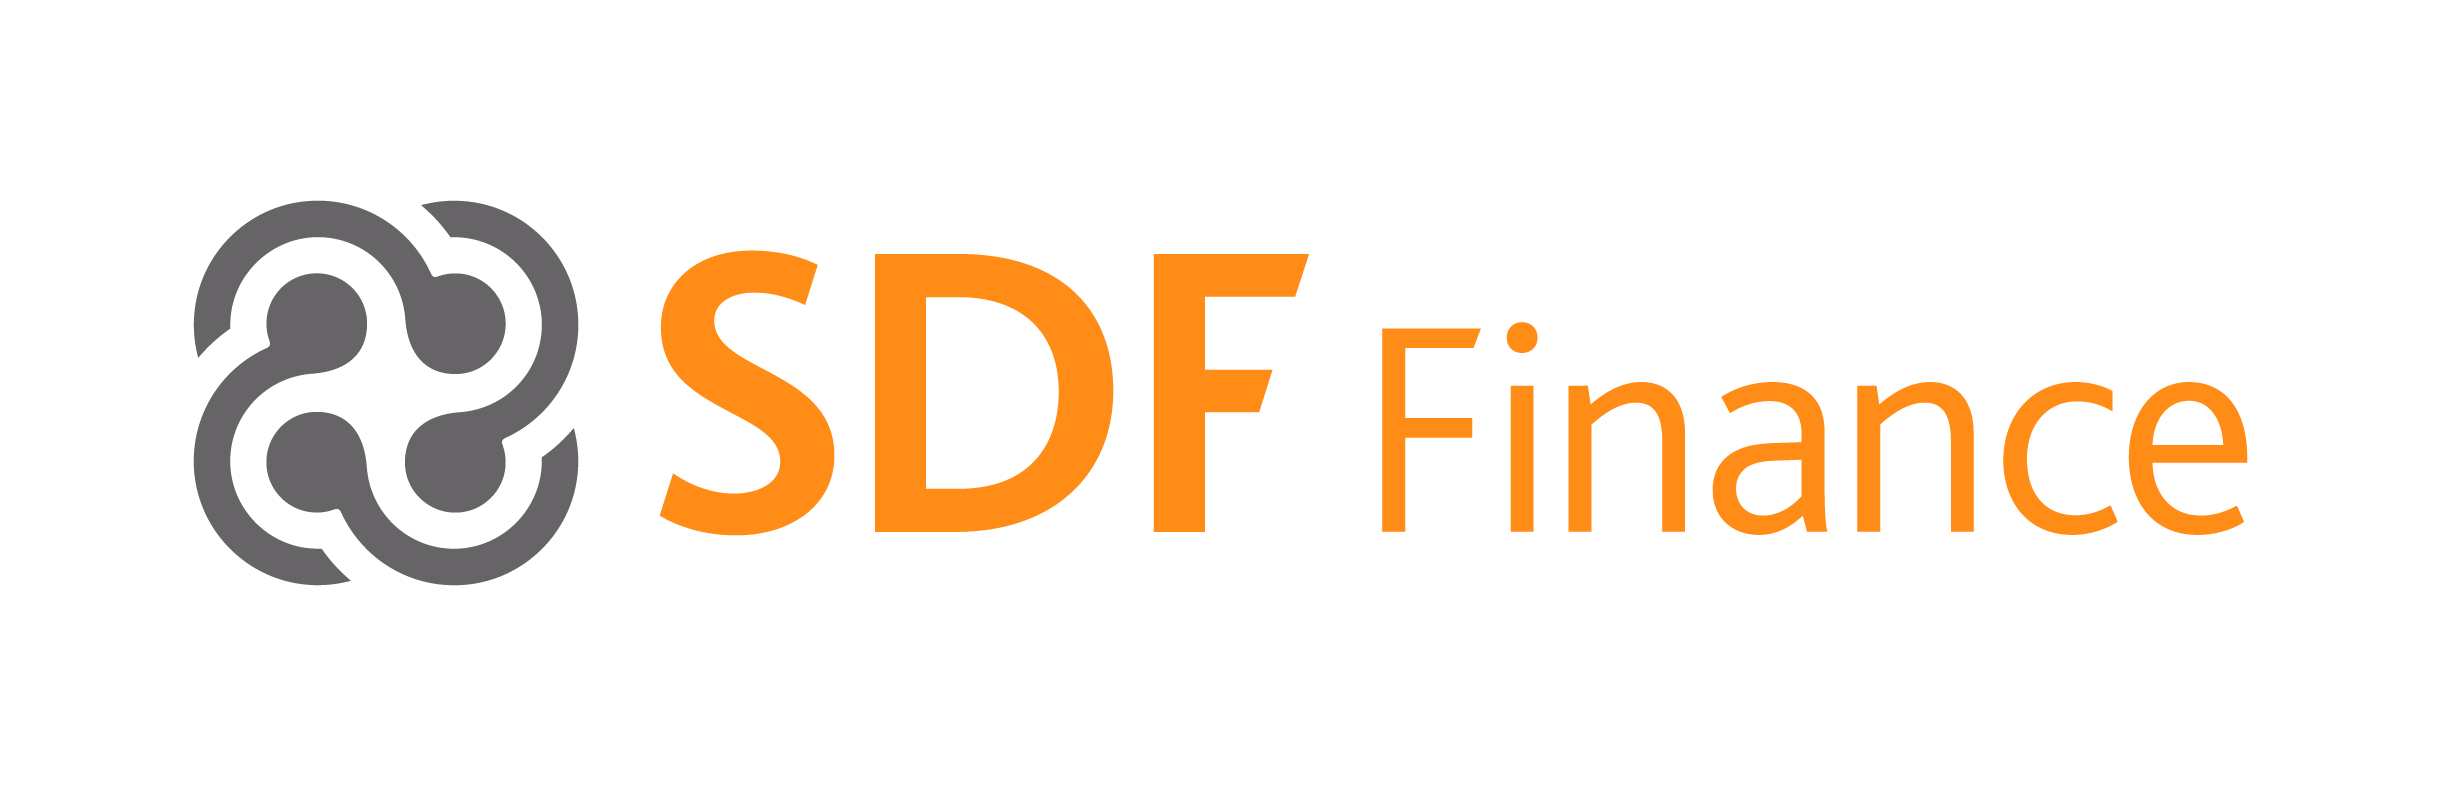 SDF Finance-01